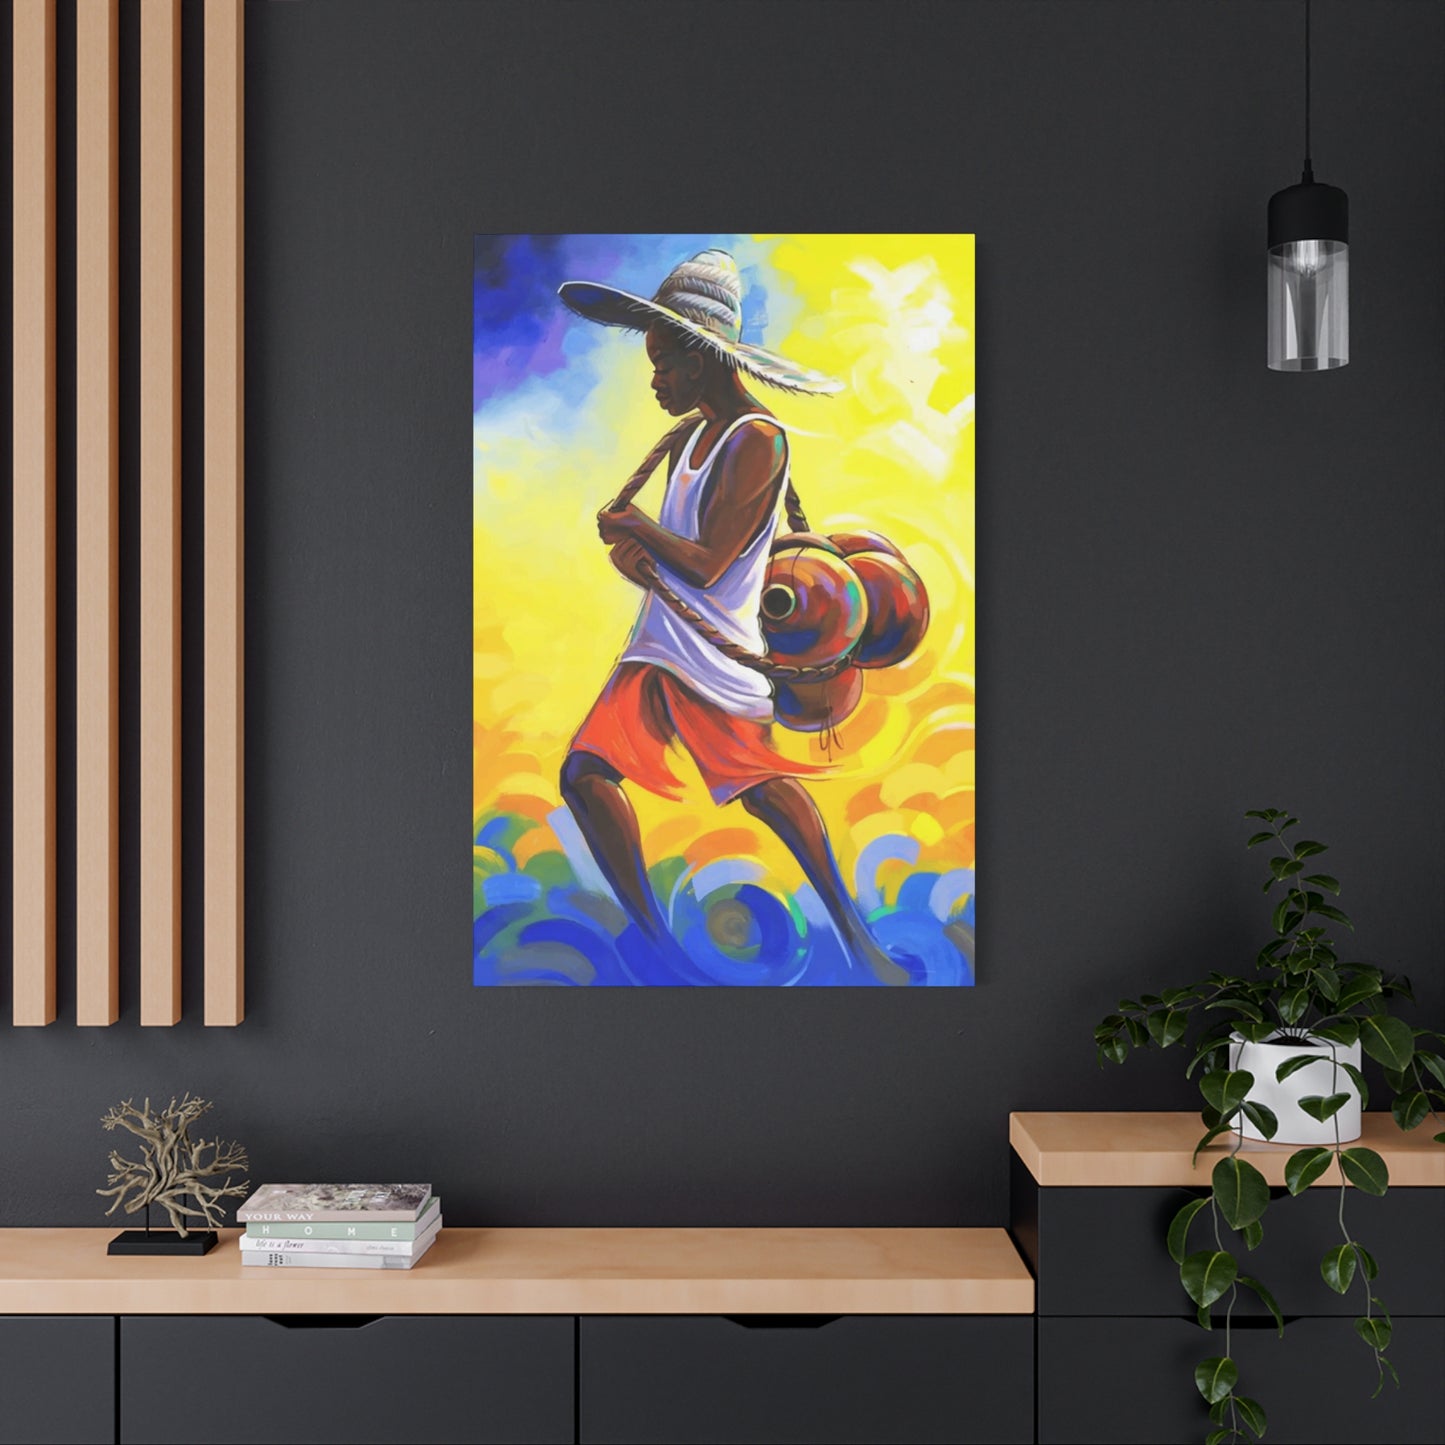 African Boy Wall Art & Canvas Prints